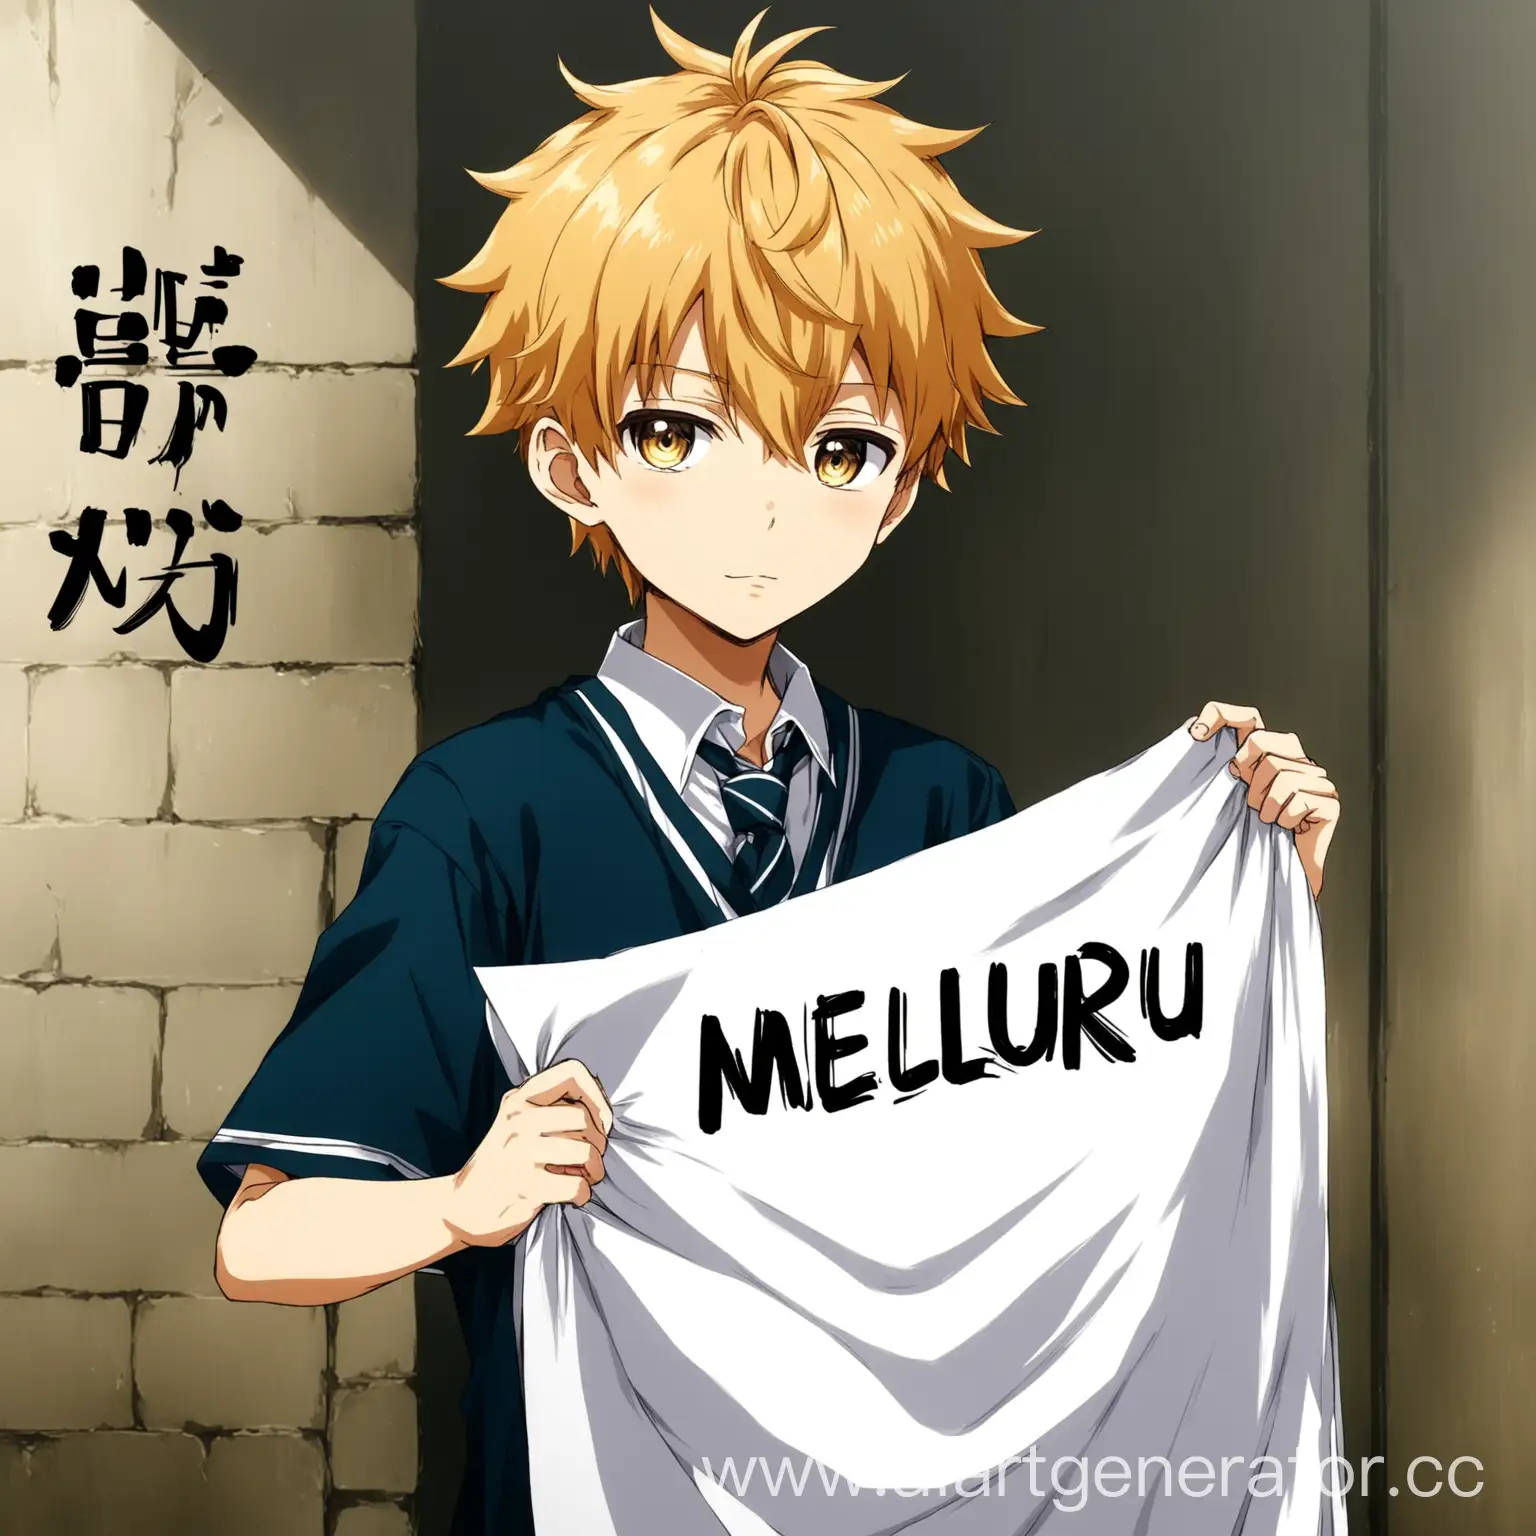 Anime-Schoolboy-Holding-Sheet-with-Inscription-MELLURU